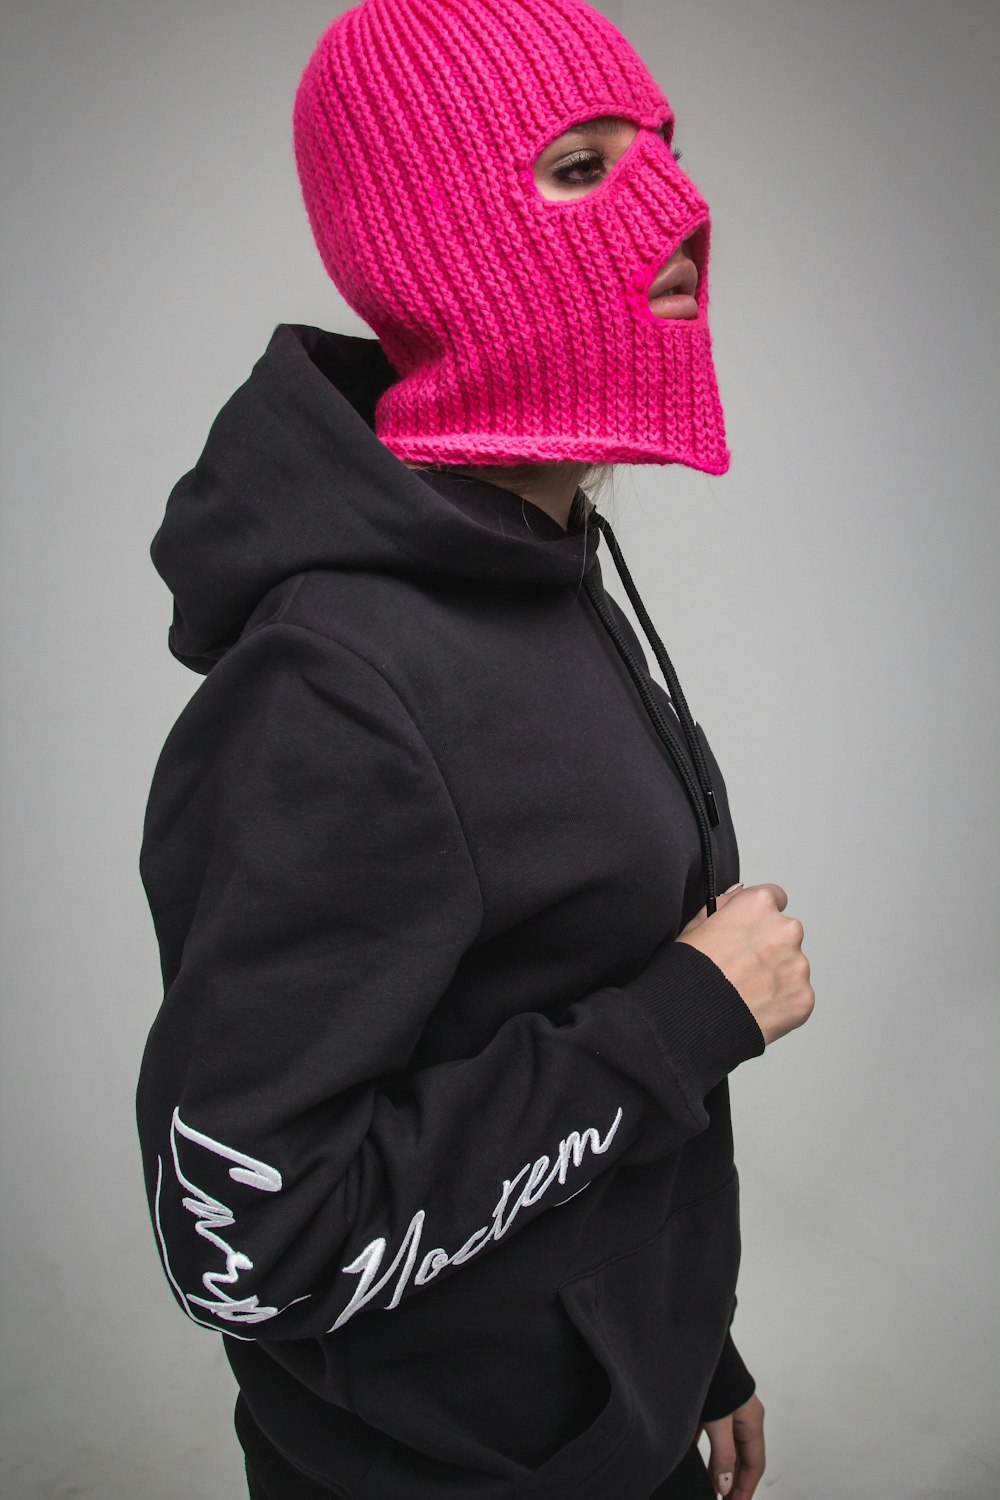 woman wearing pink knitted mask